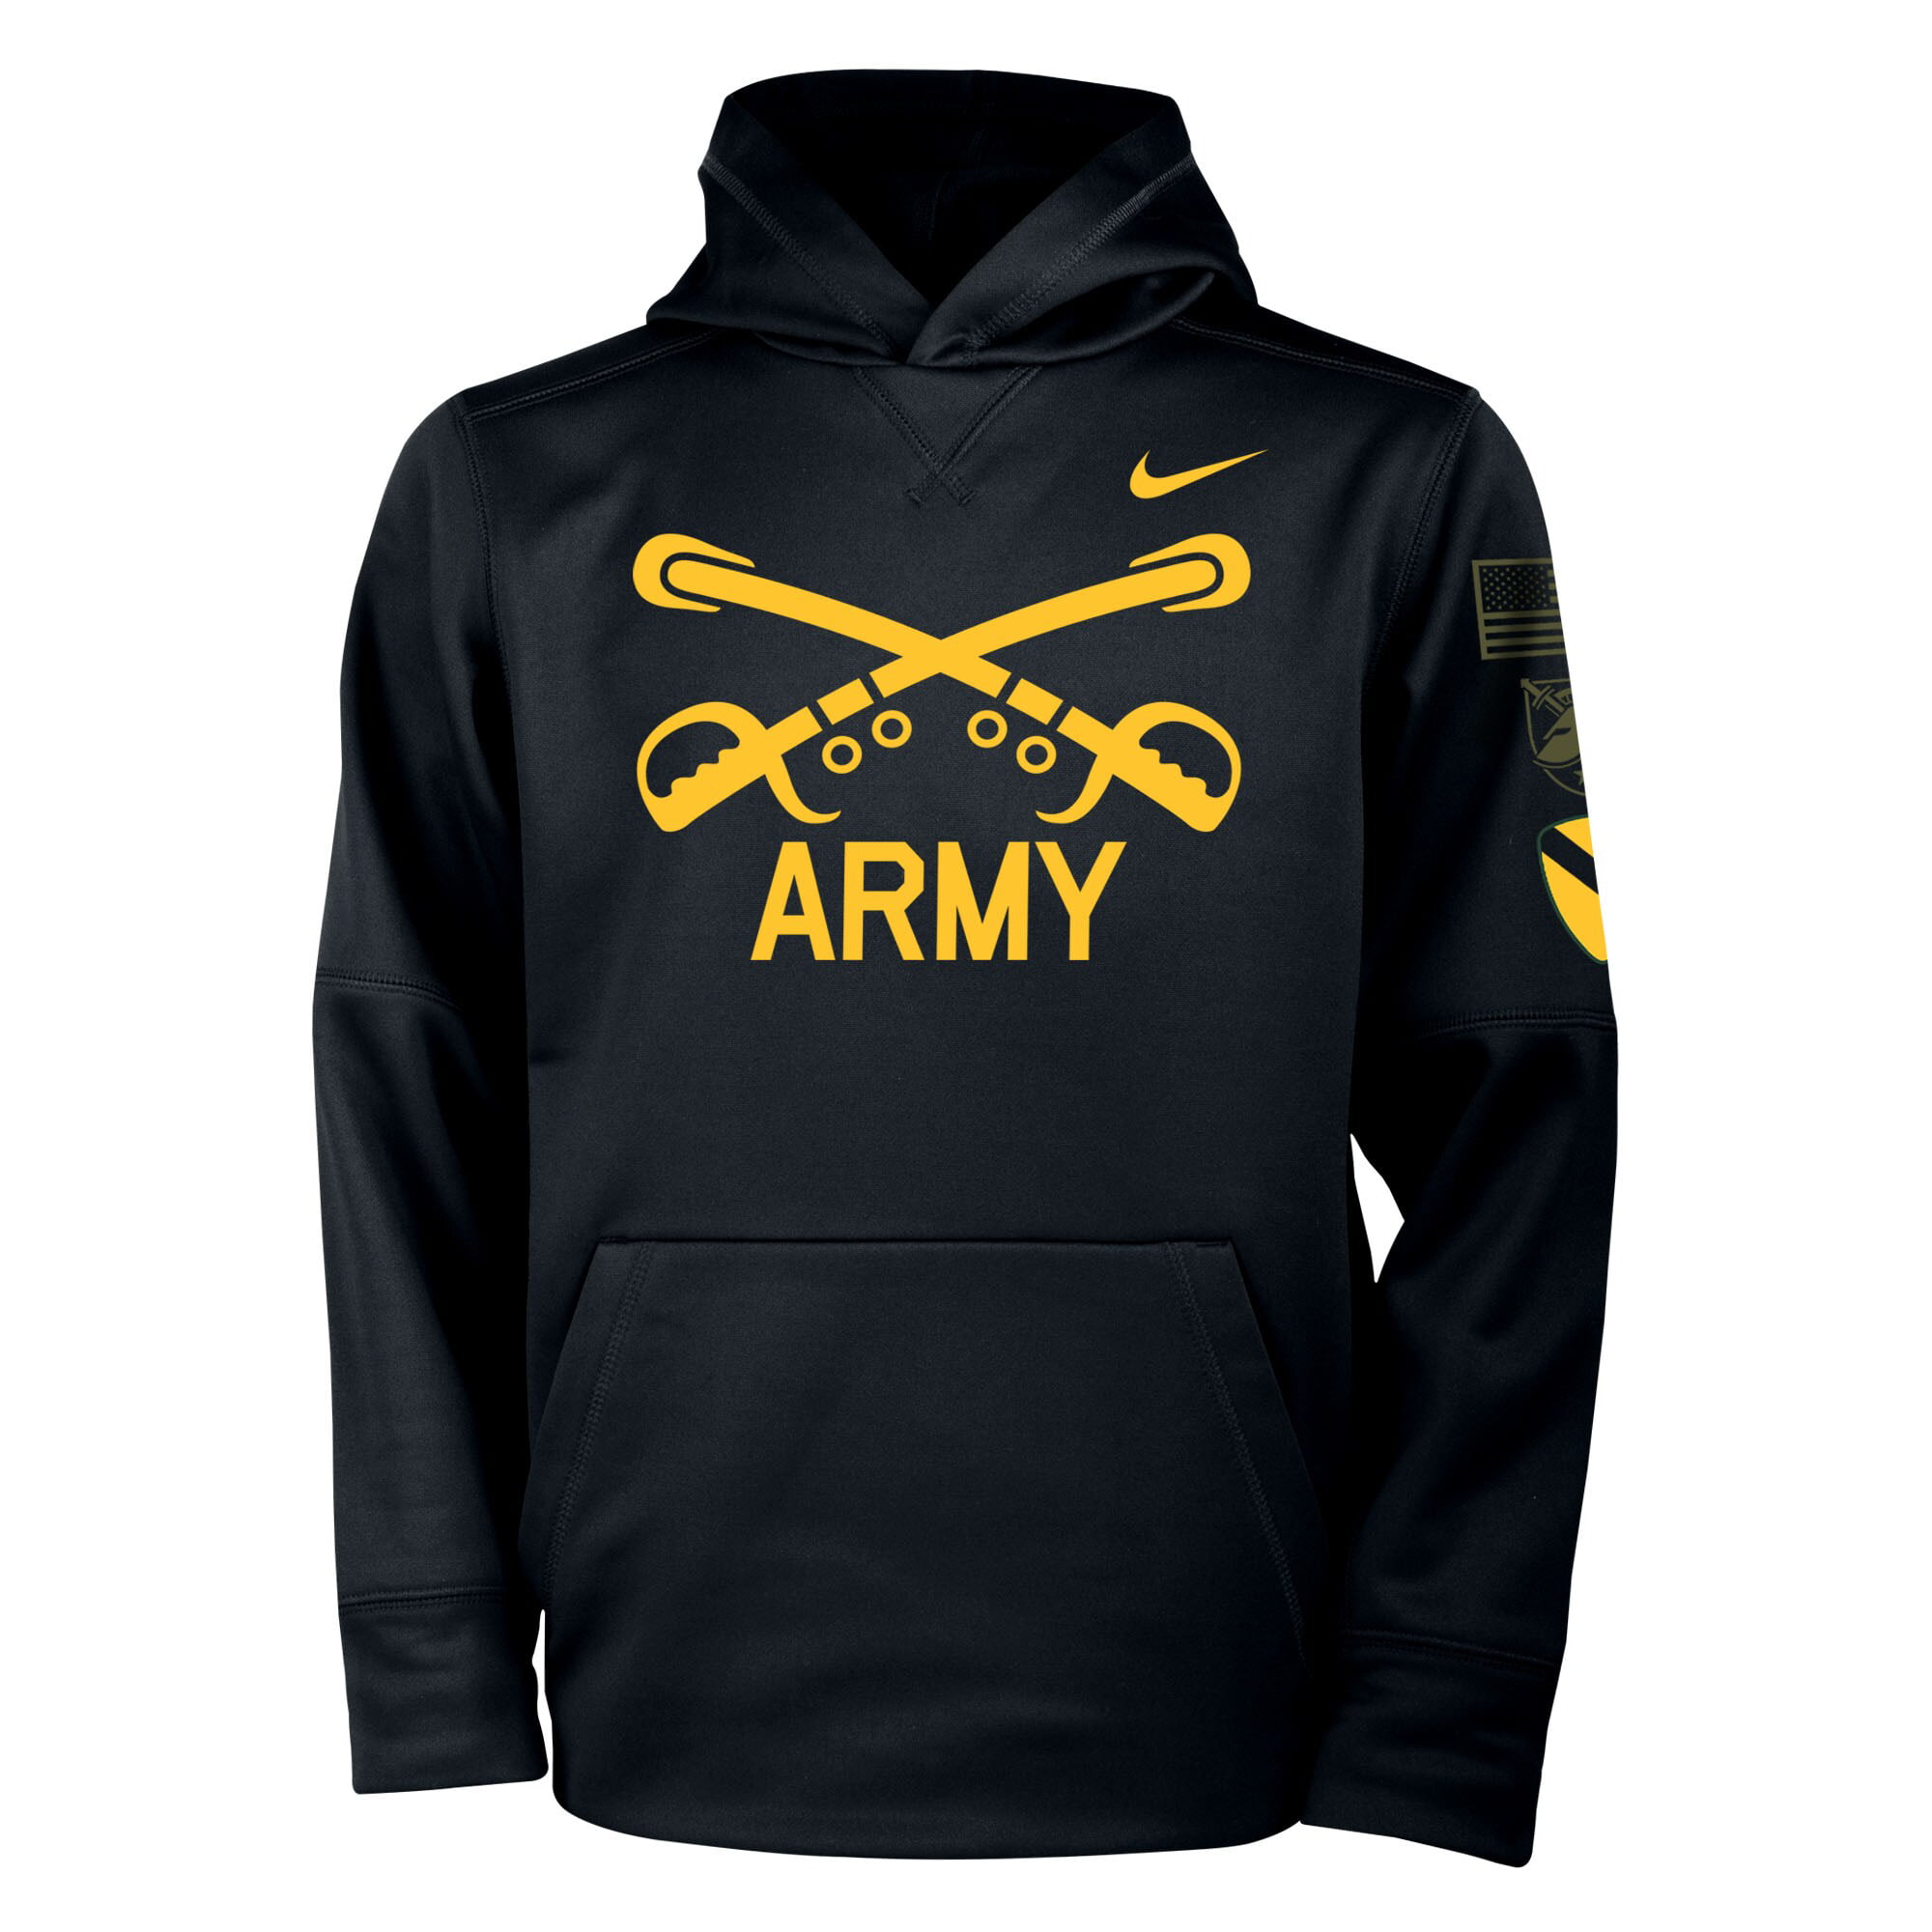 Nike Army Black Knights Nike Youth 1st Cavalry Division Hoodie Black Walmart Com Walmart Com [ 2000 x 2000 Pixel ]